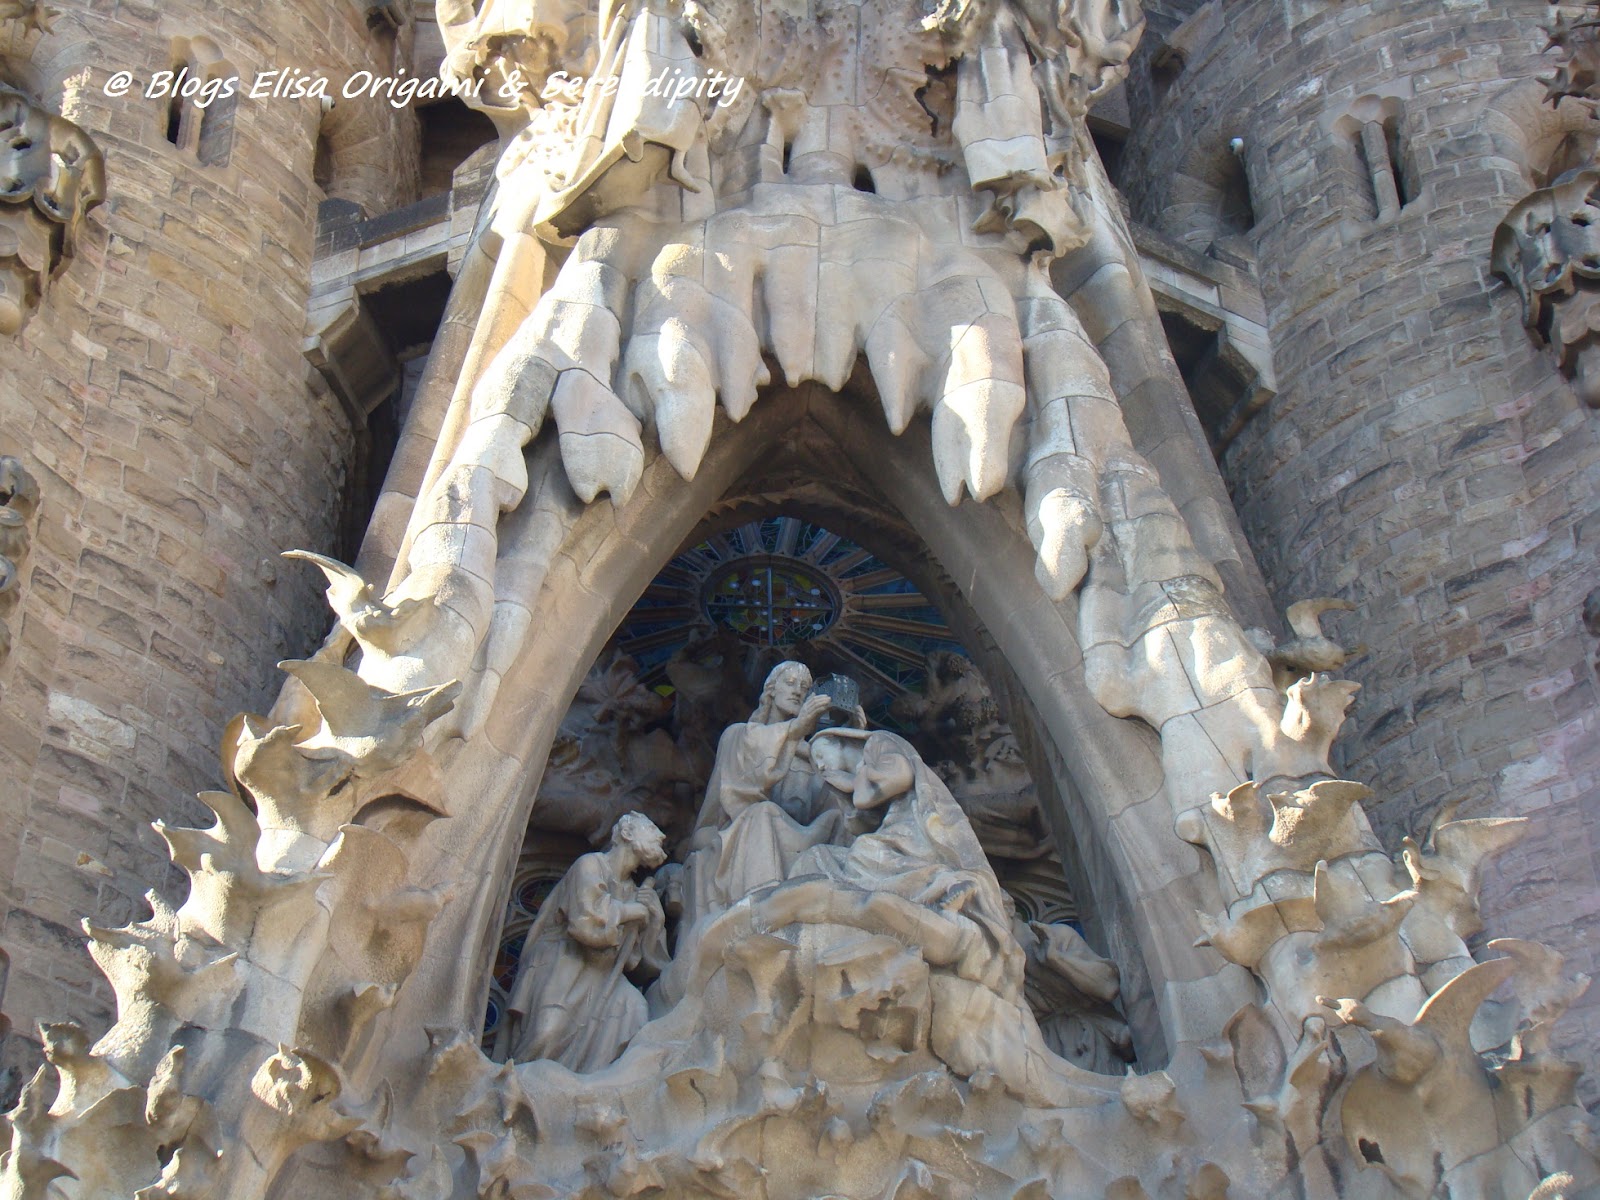 Catedral Sagrada Familia, Barcelona, Gaudí, Elisa N, Blog de Viajes, Lifestyle, Travel